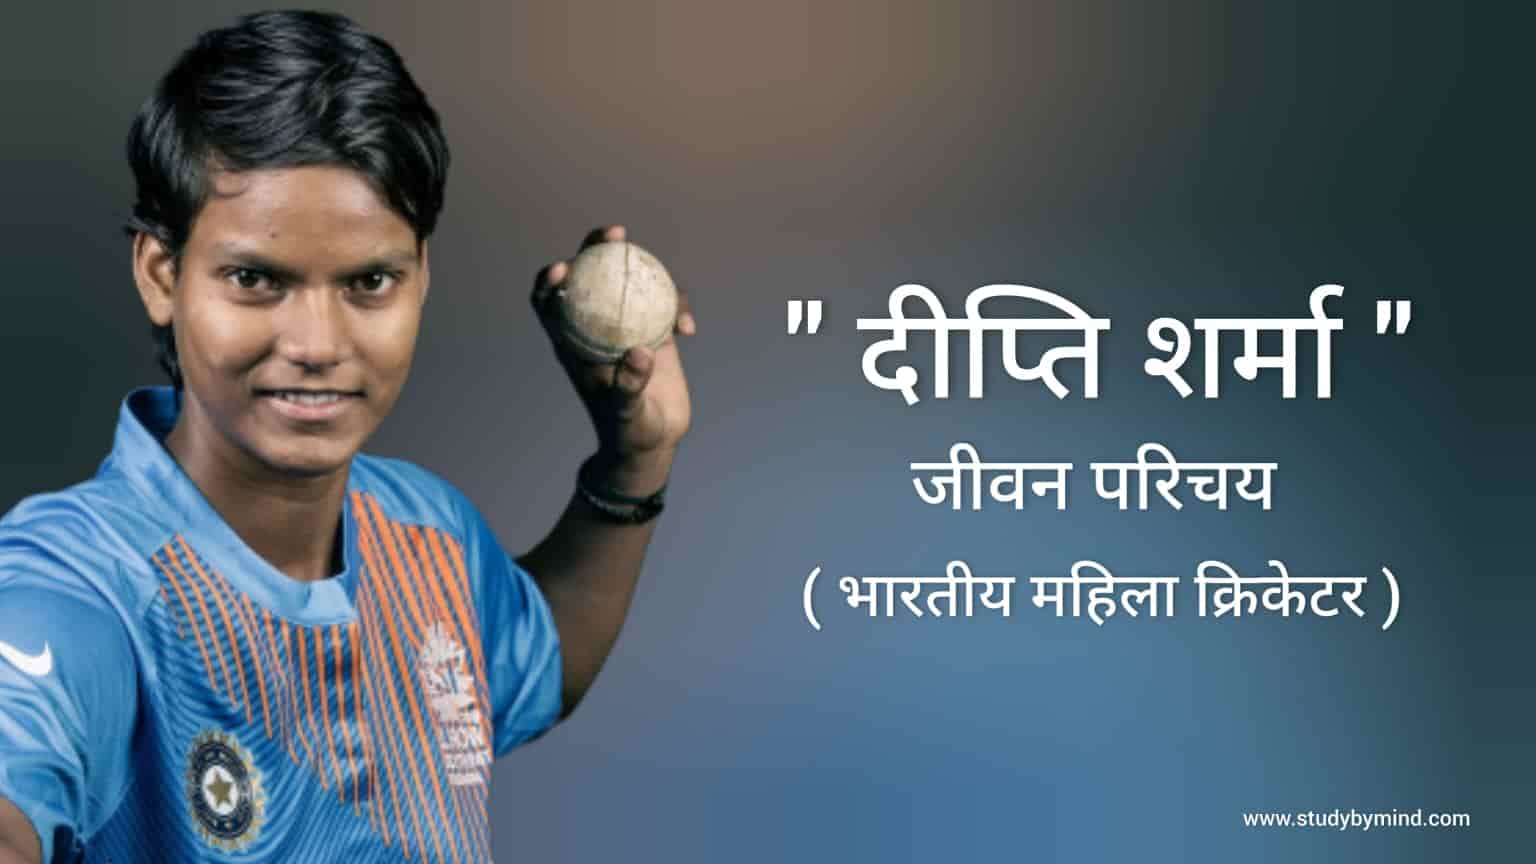 दीप्ति शर्मा जीवन परिचय Deepti sharma biography in hindi (भारतीय महिला क्रिकेटर - all rounder)